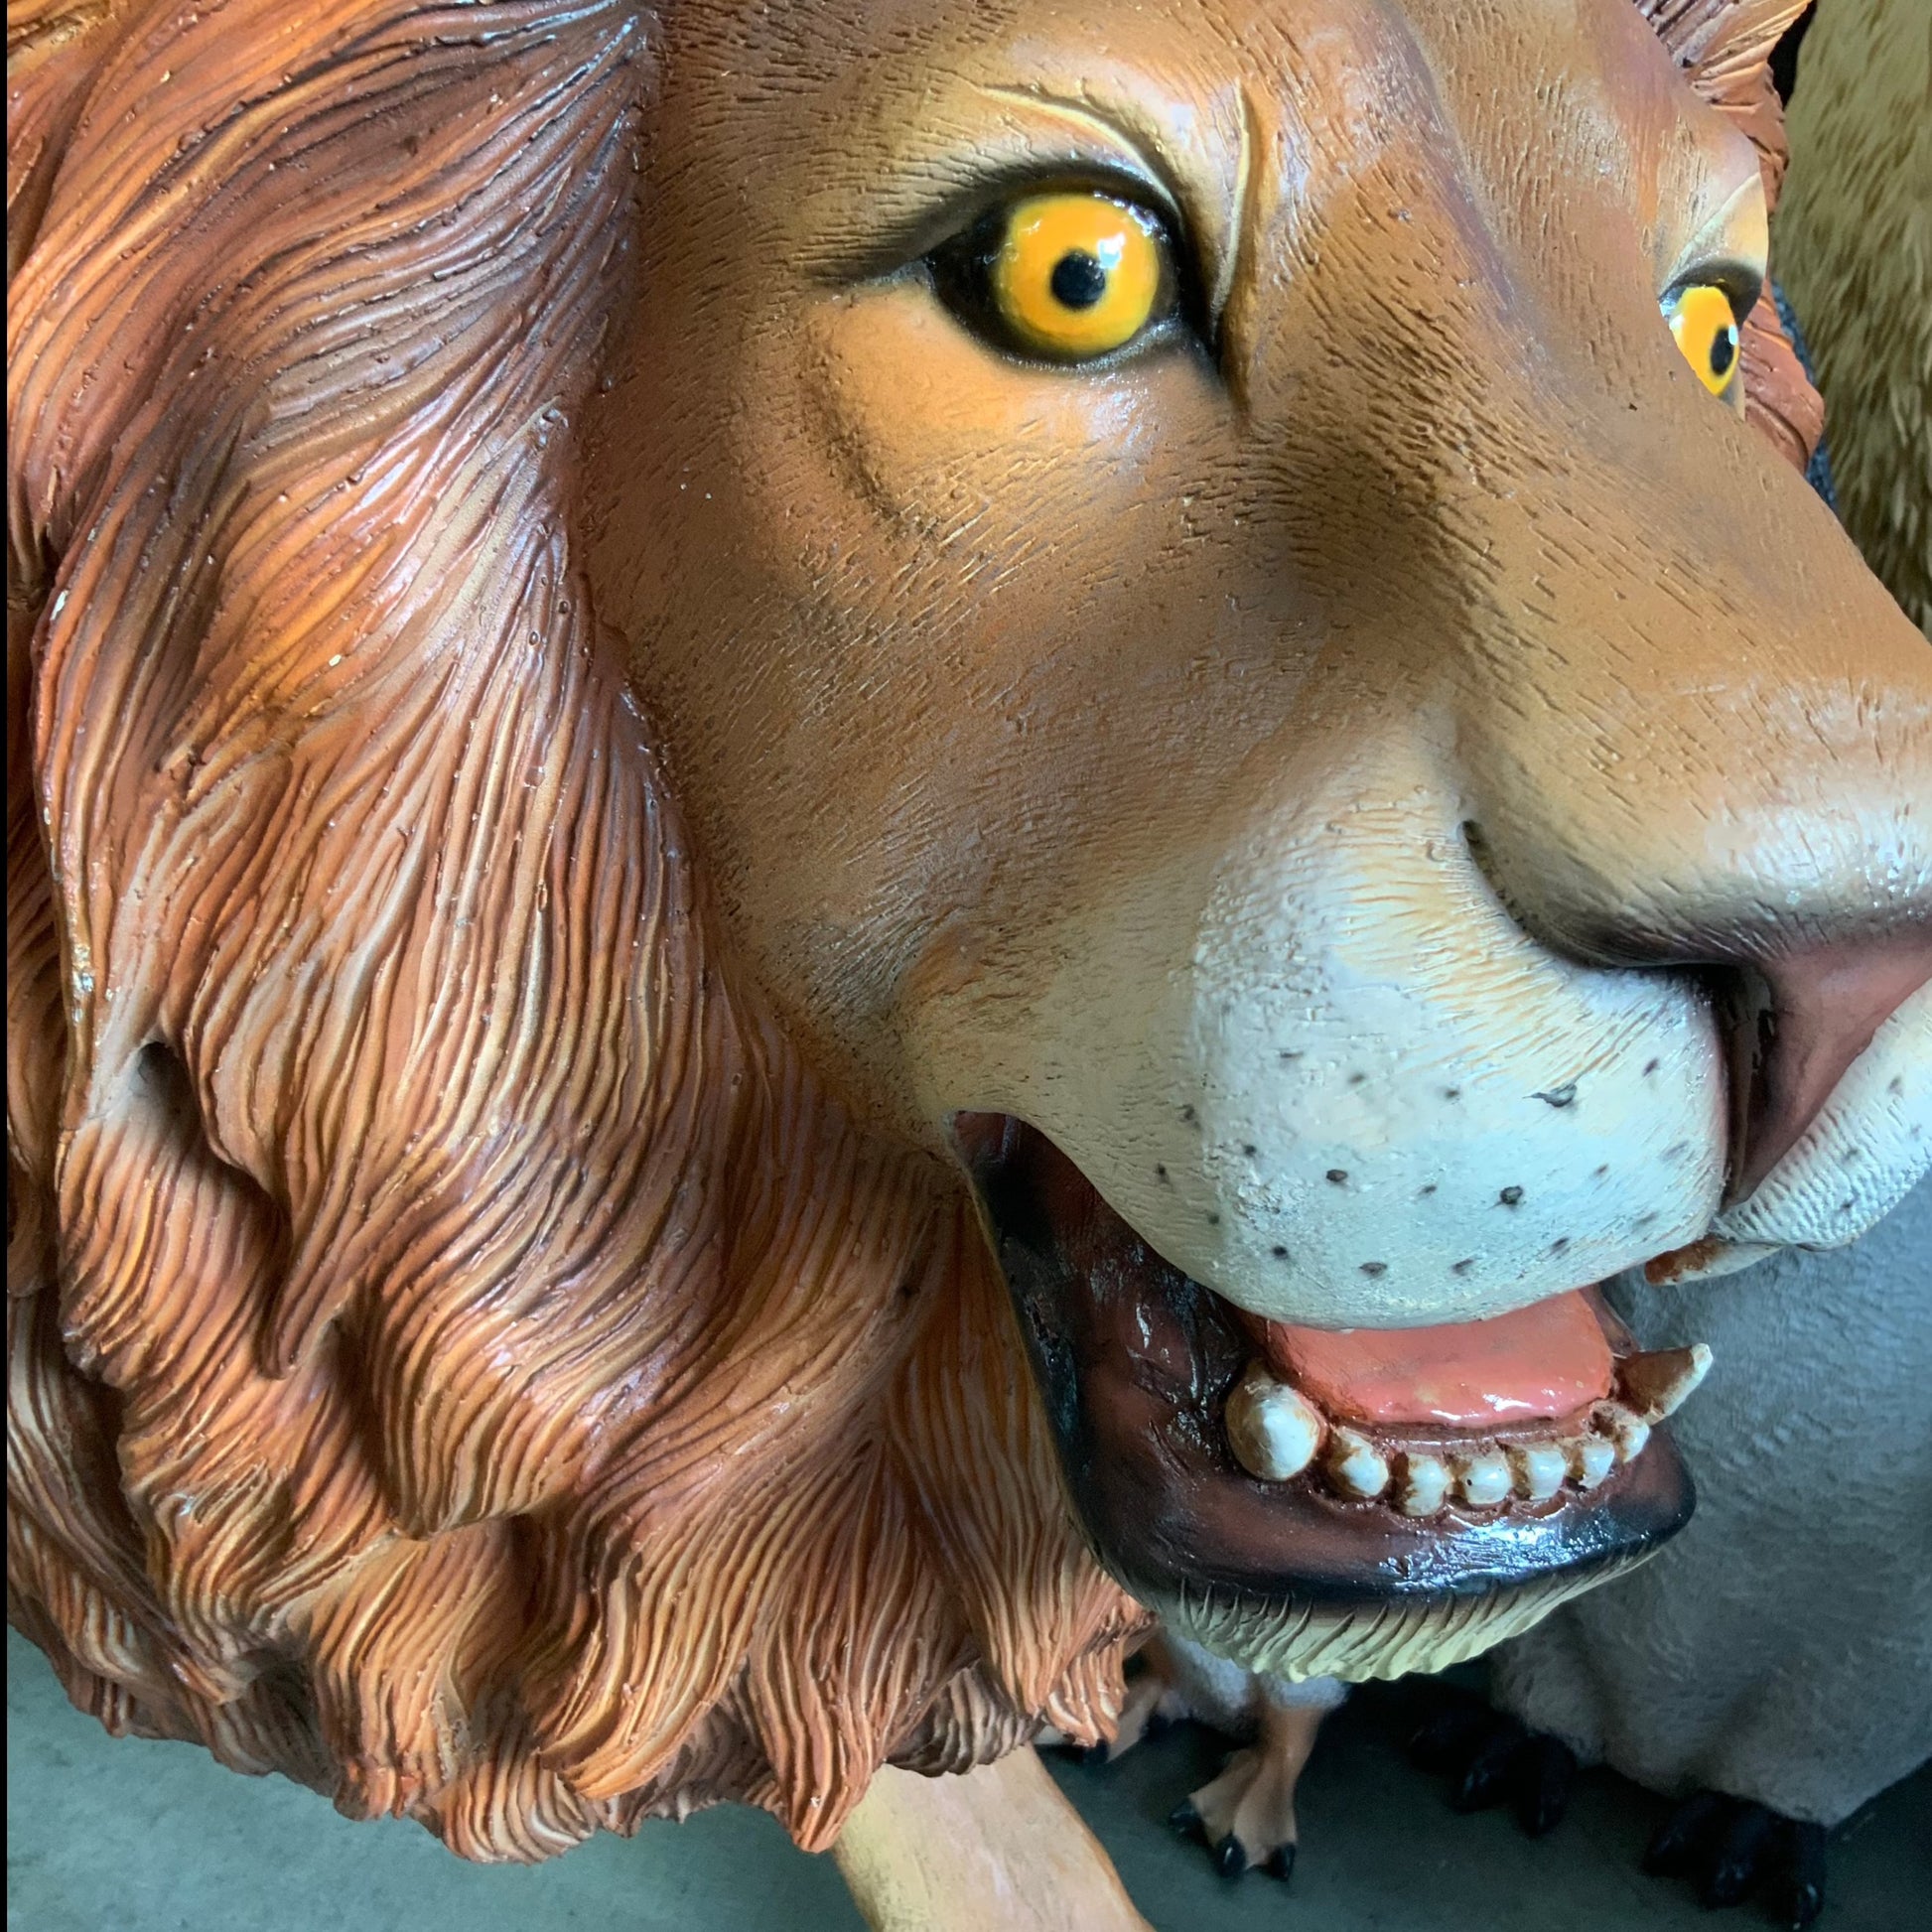 Walking Lion Life Size Statue - LM Treasures Prop Rentals 